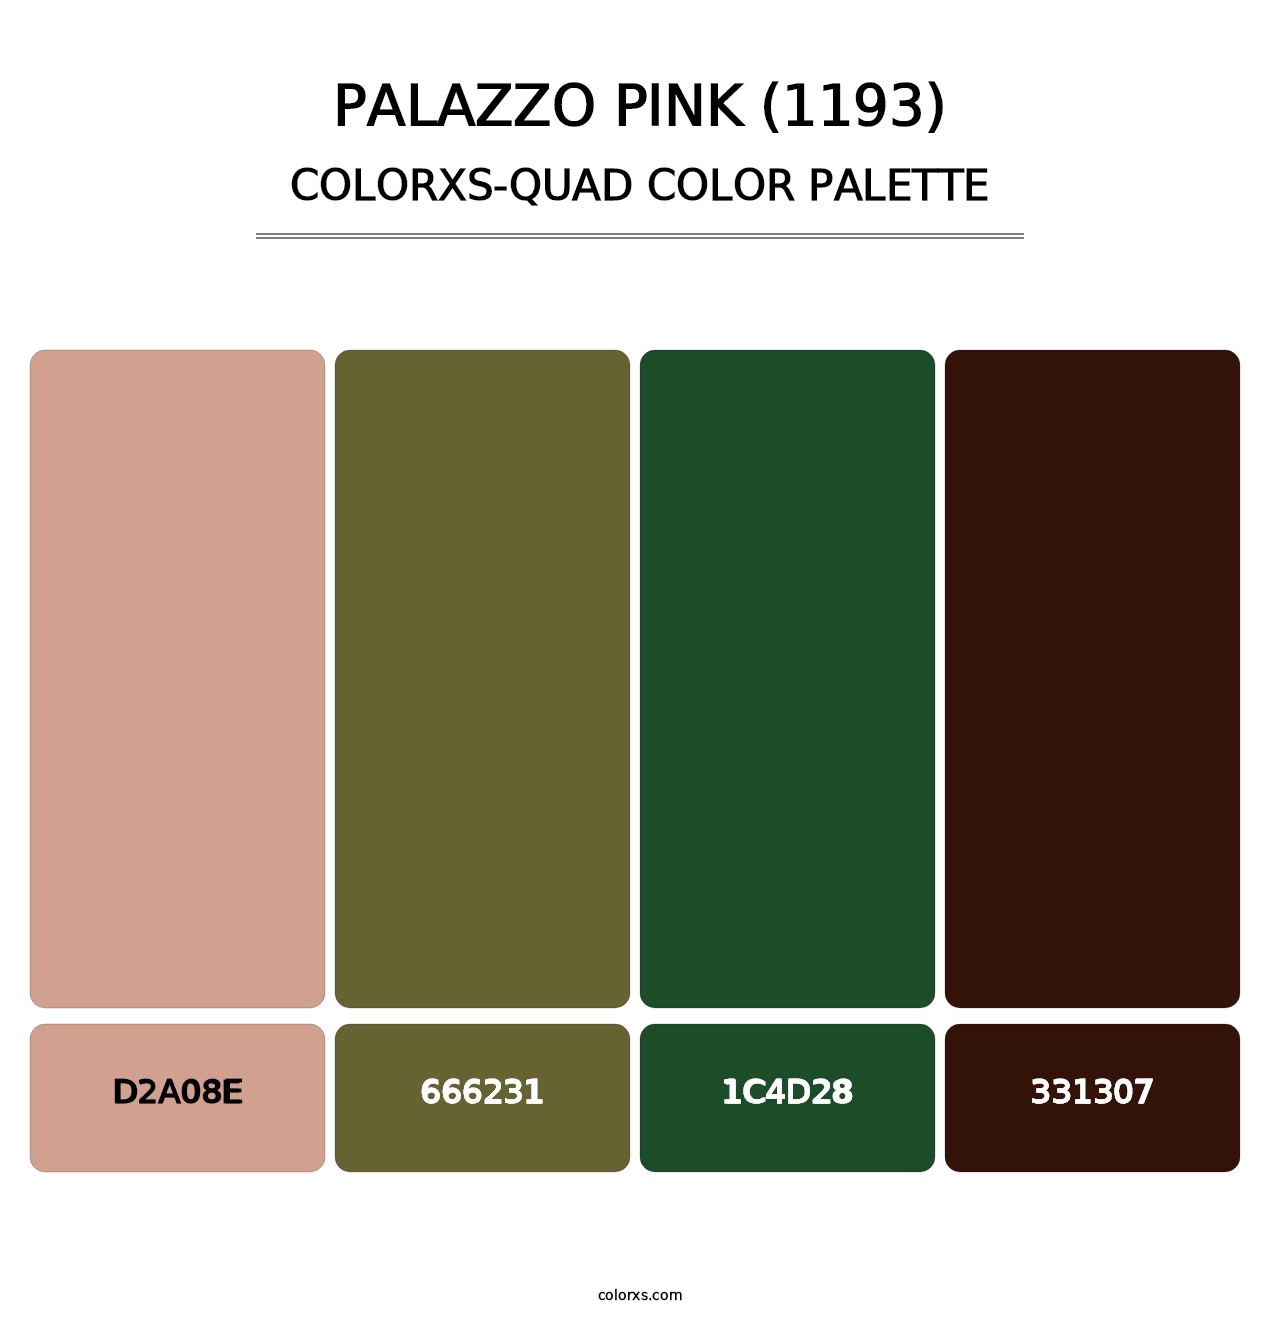 Palazzo Pink (1193) - Colorxs Quad Palette